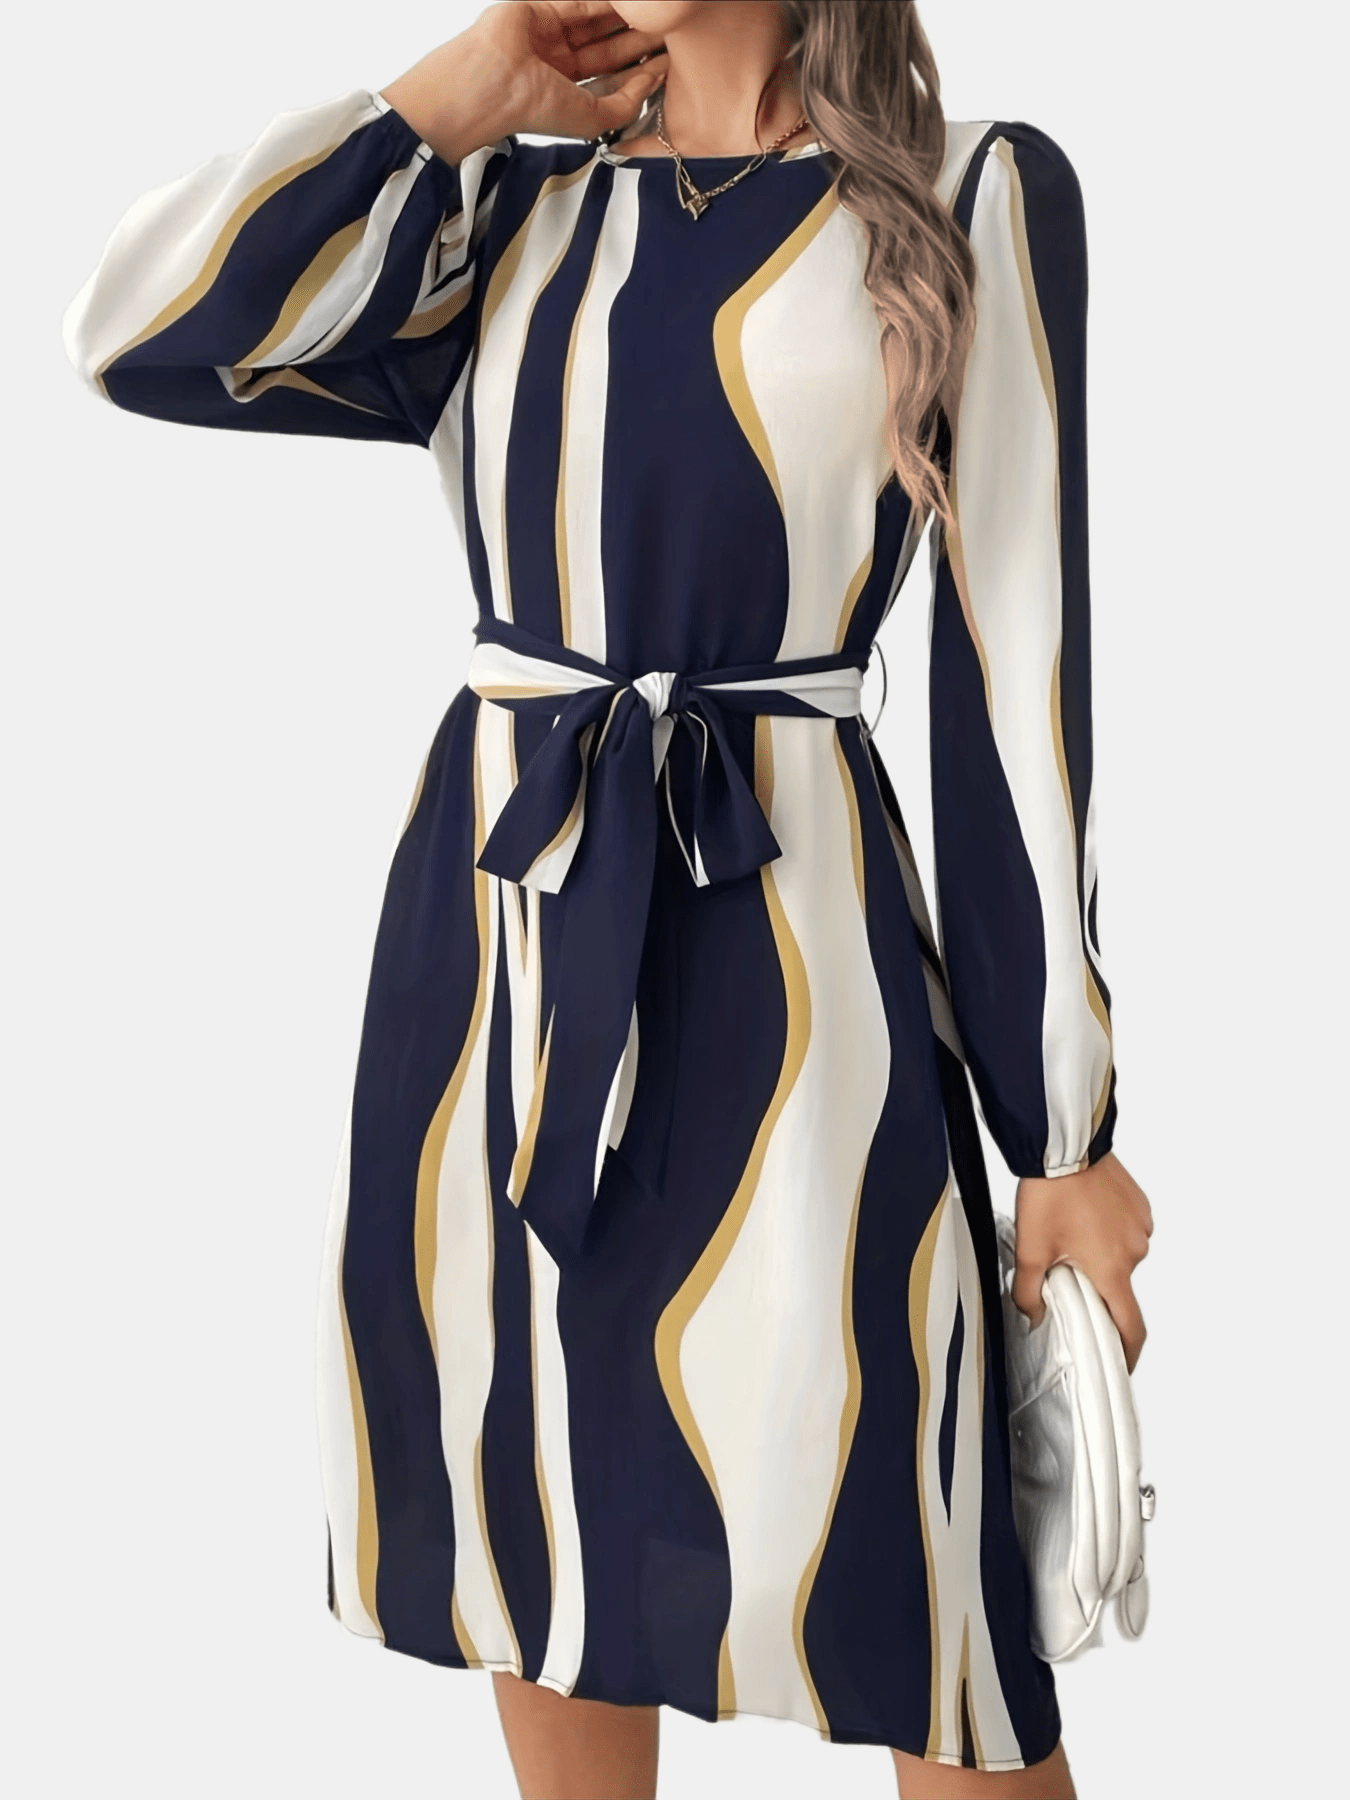 xieyinshe  Wavy Stripe Print Dress, Casual Keyhole Long Sleeve Dress, Women's Clothing